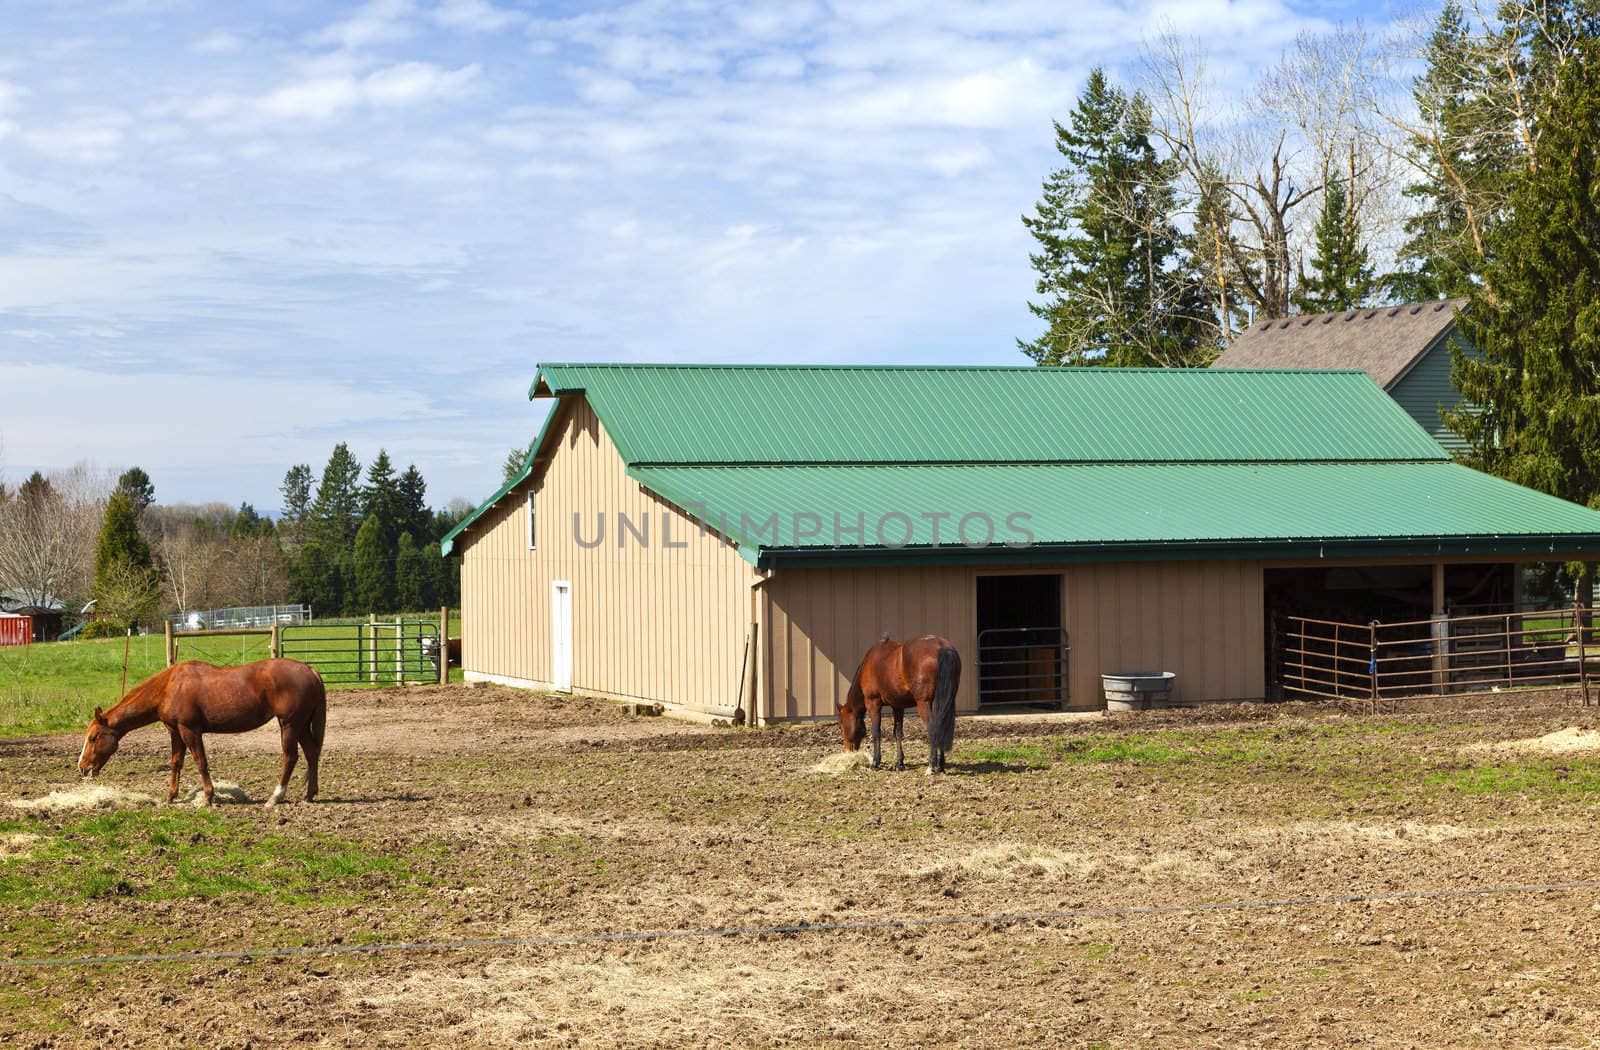 Feeding horses and barn in rural Oregon. by Rigucci